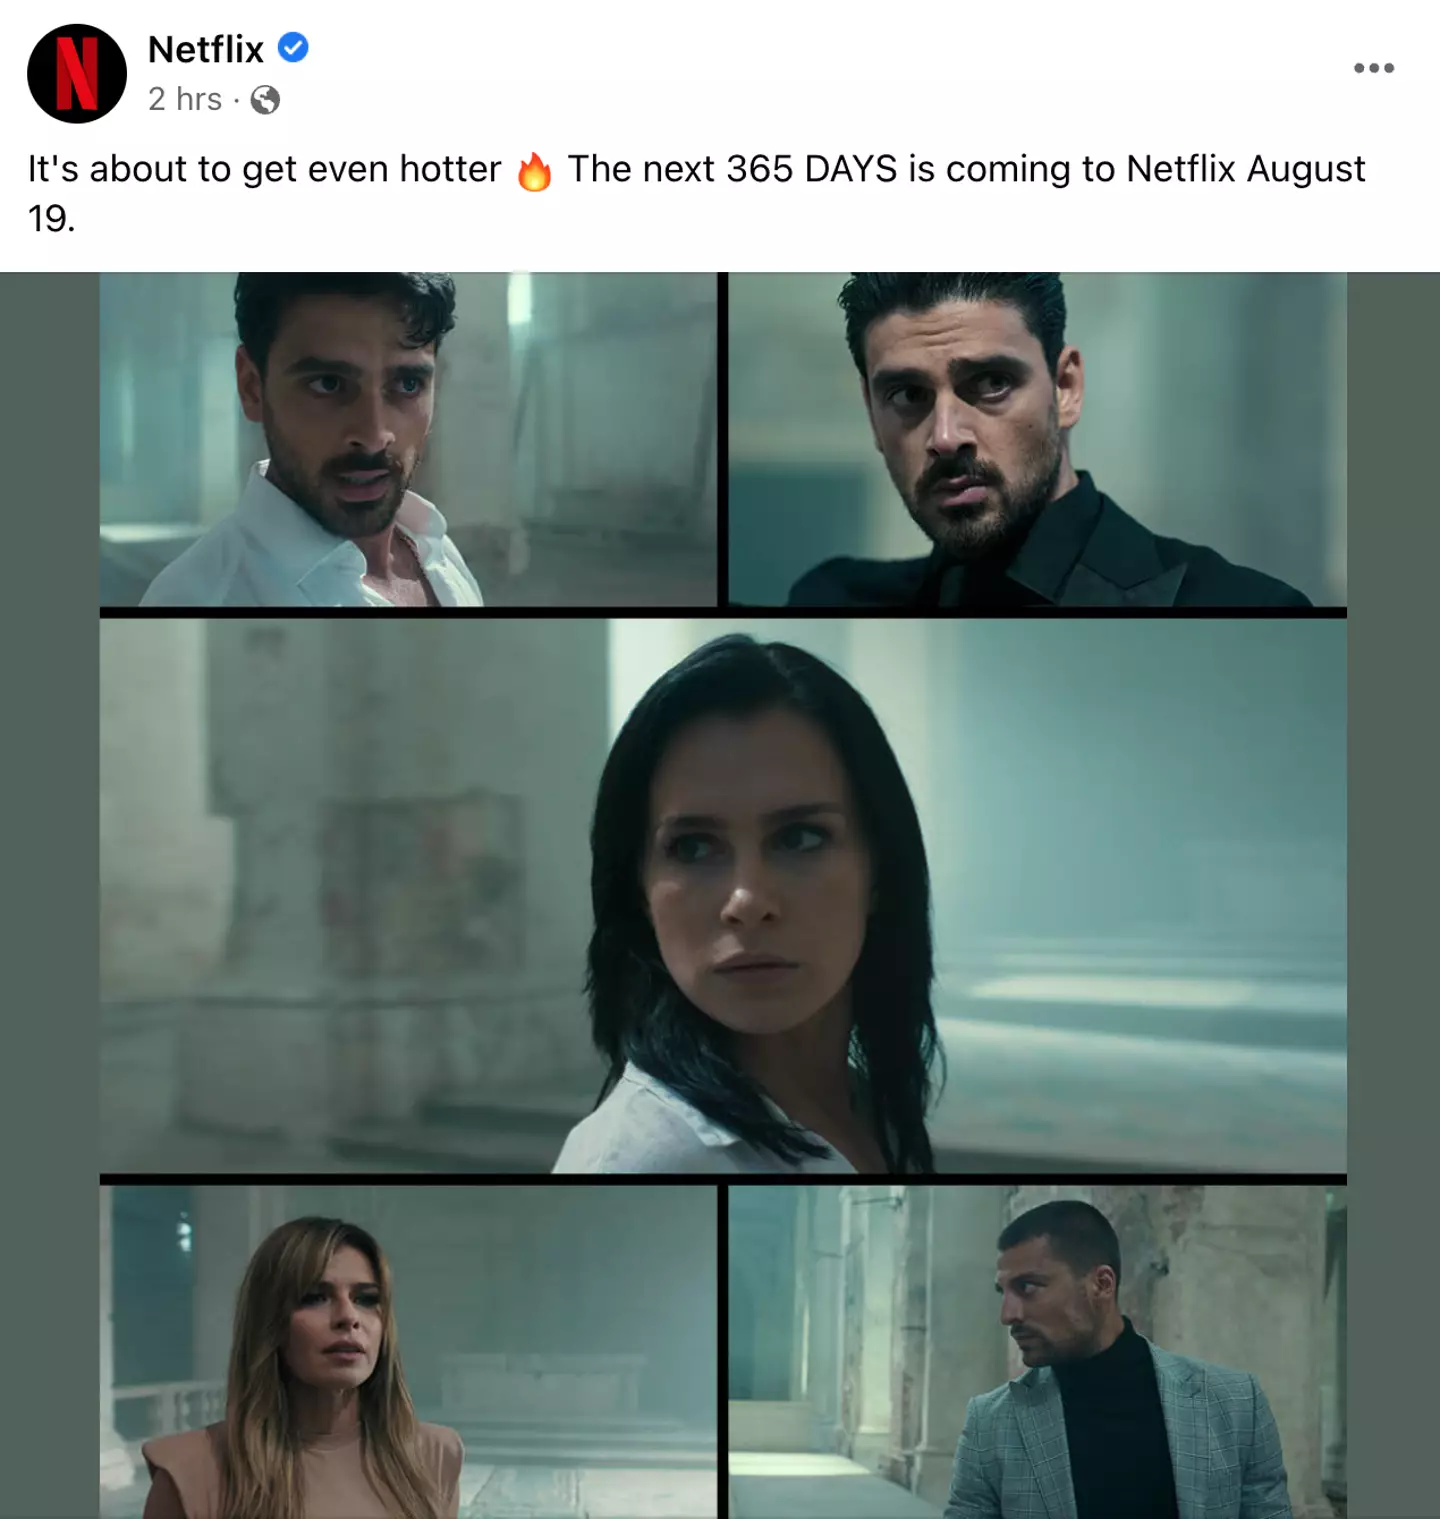 Netflix has announced the next 365 Days instalment...